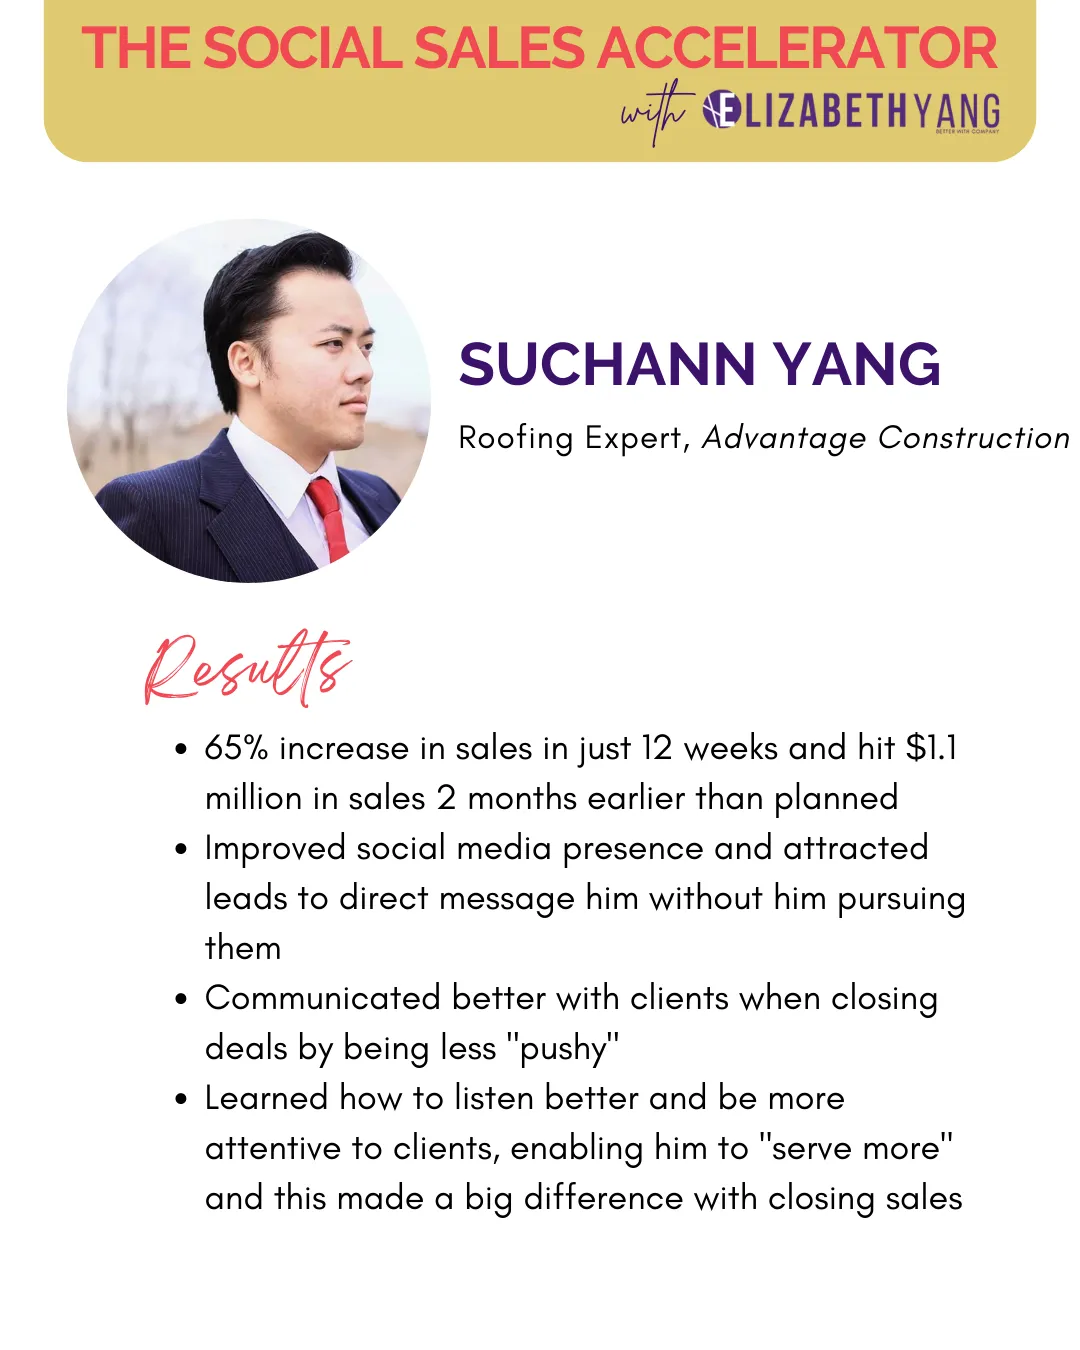 Suchann Yang - Social Sales Accelerator with Elizabeth Yang